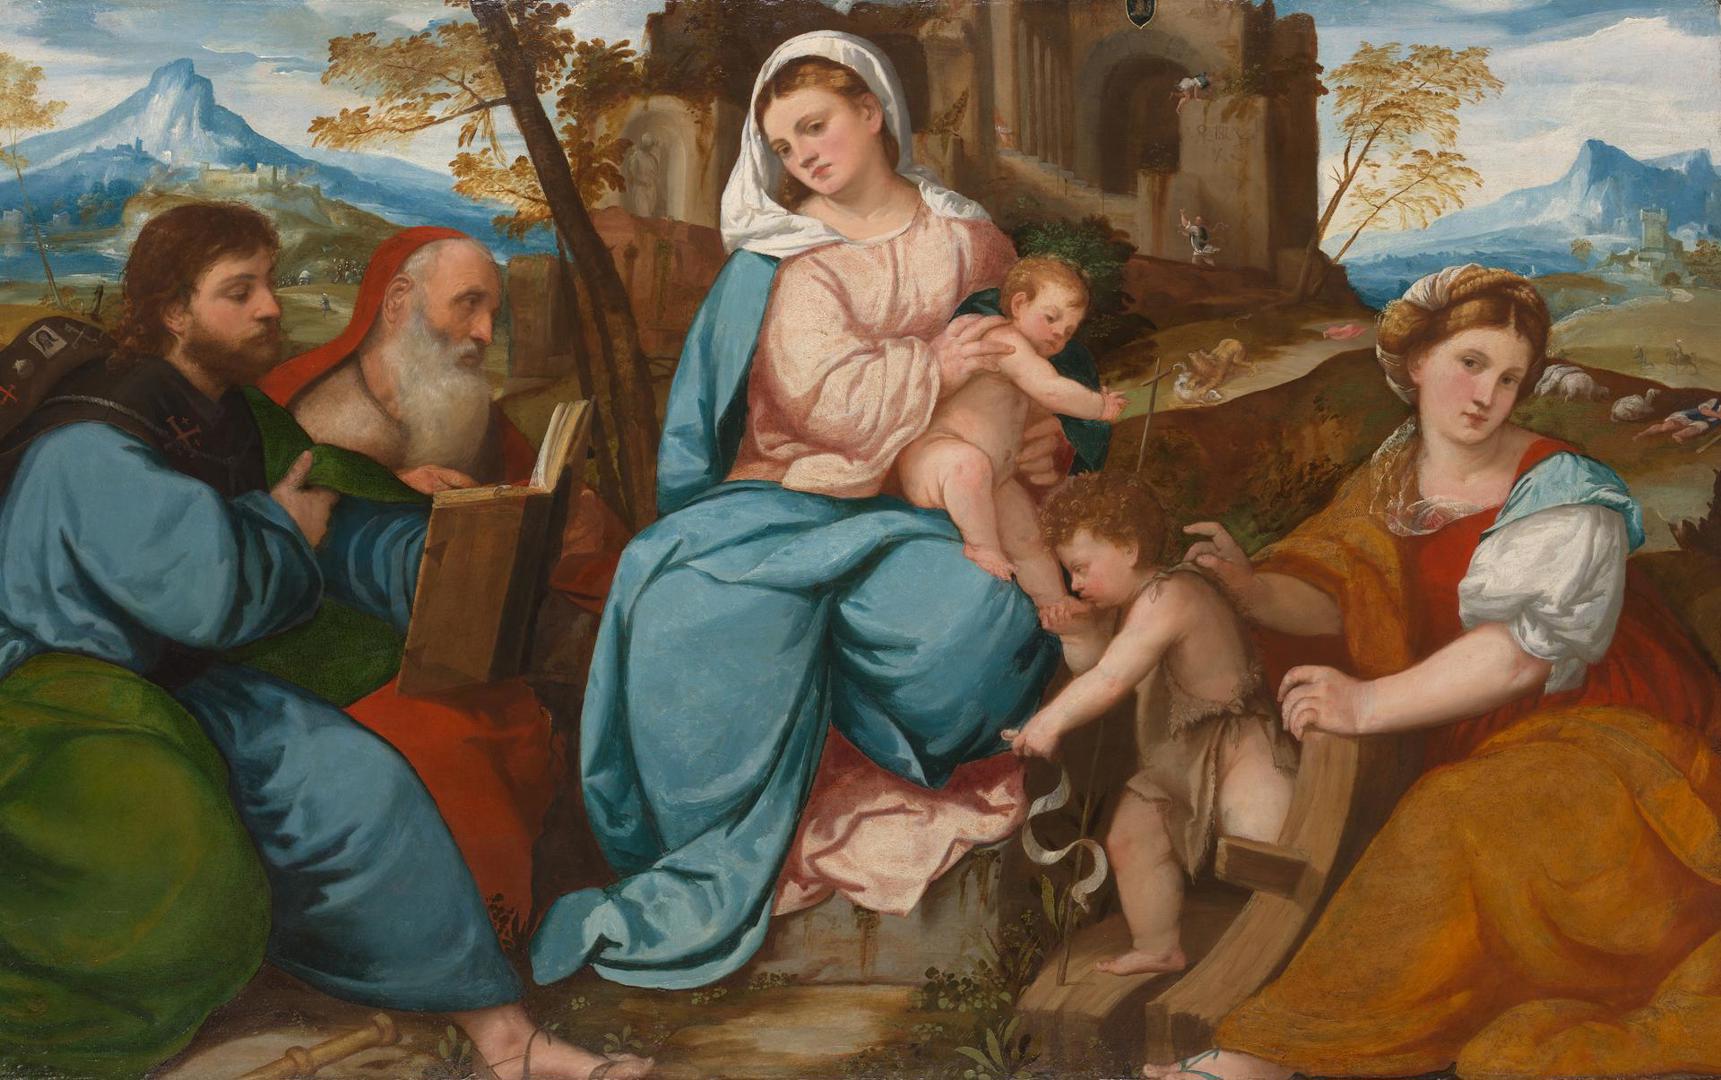 The Madonna and Child with Saints by Bonifazio di Pitati